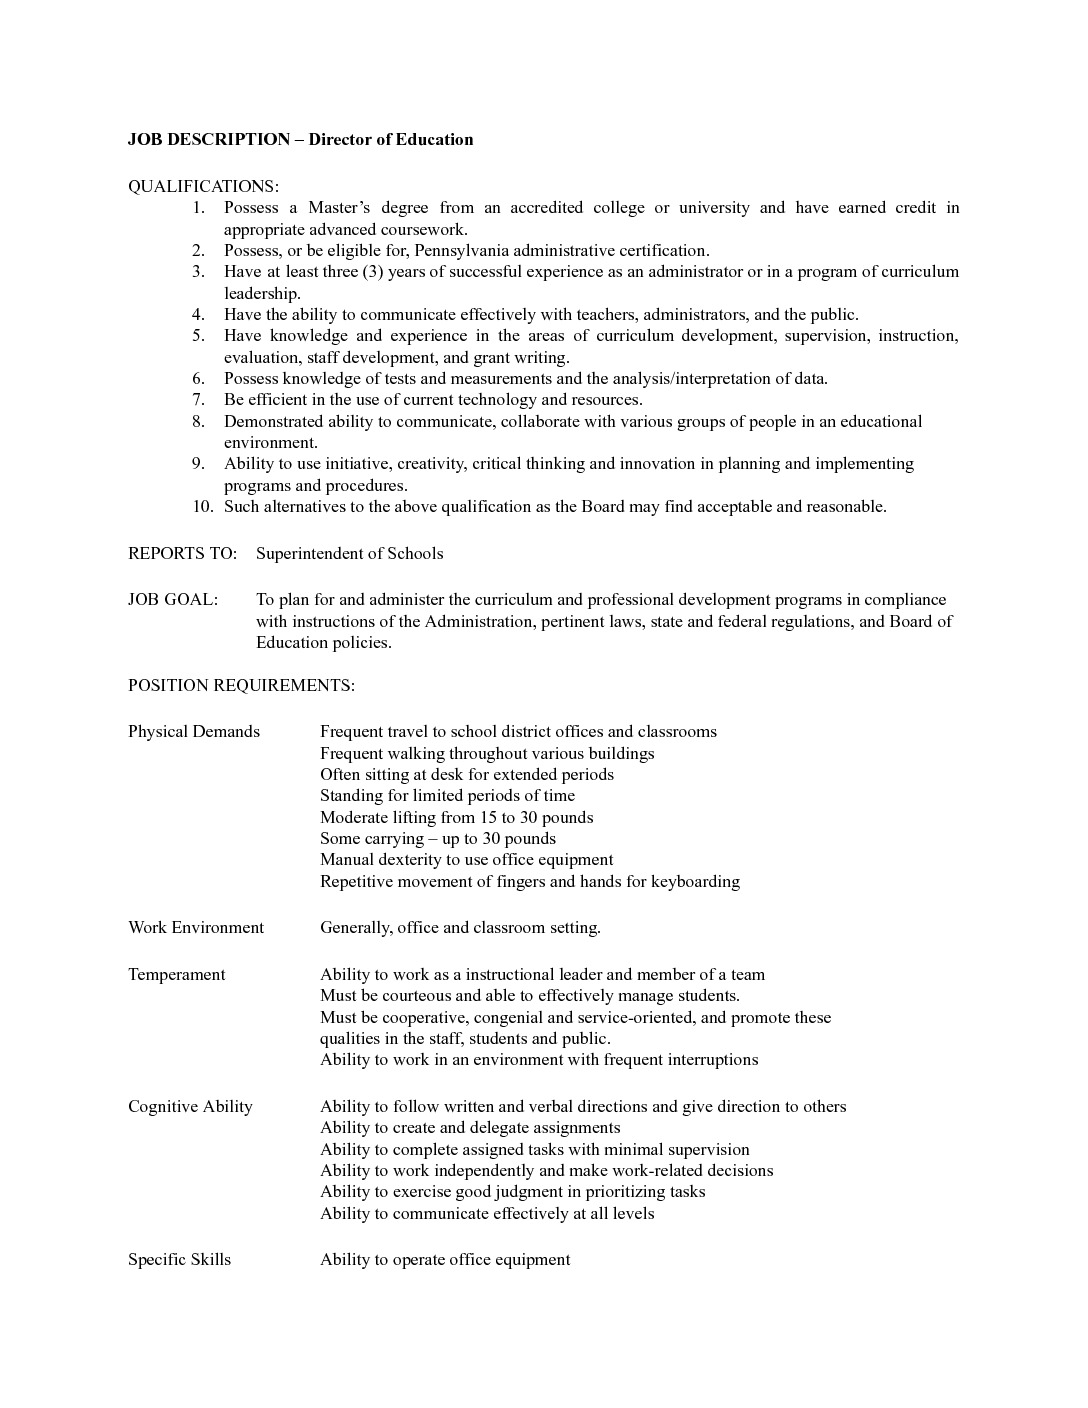 Department of education job description form